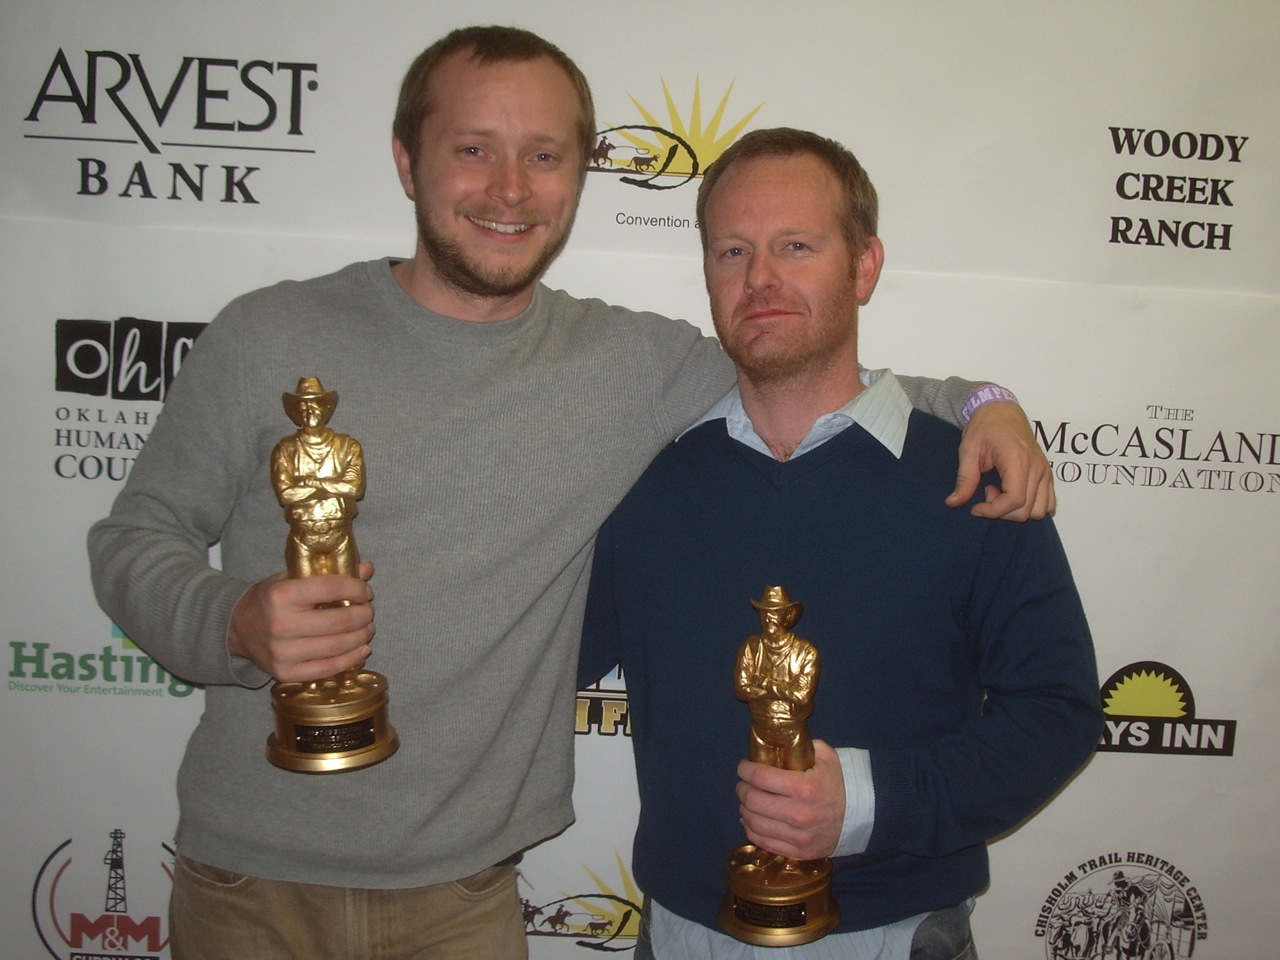 Director Bill Sebastian & producer Randall Scott with Awards for Best Drama and Best Directing at Traildance Film Festival